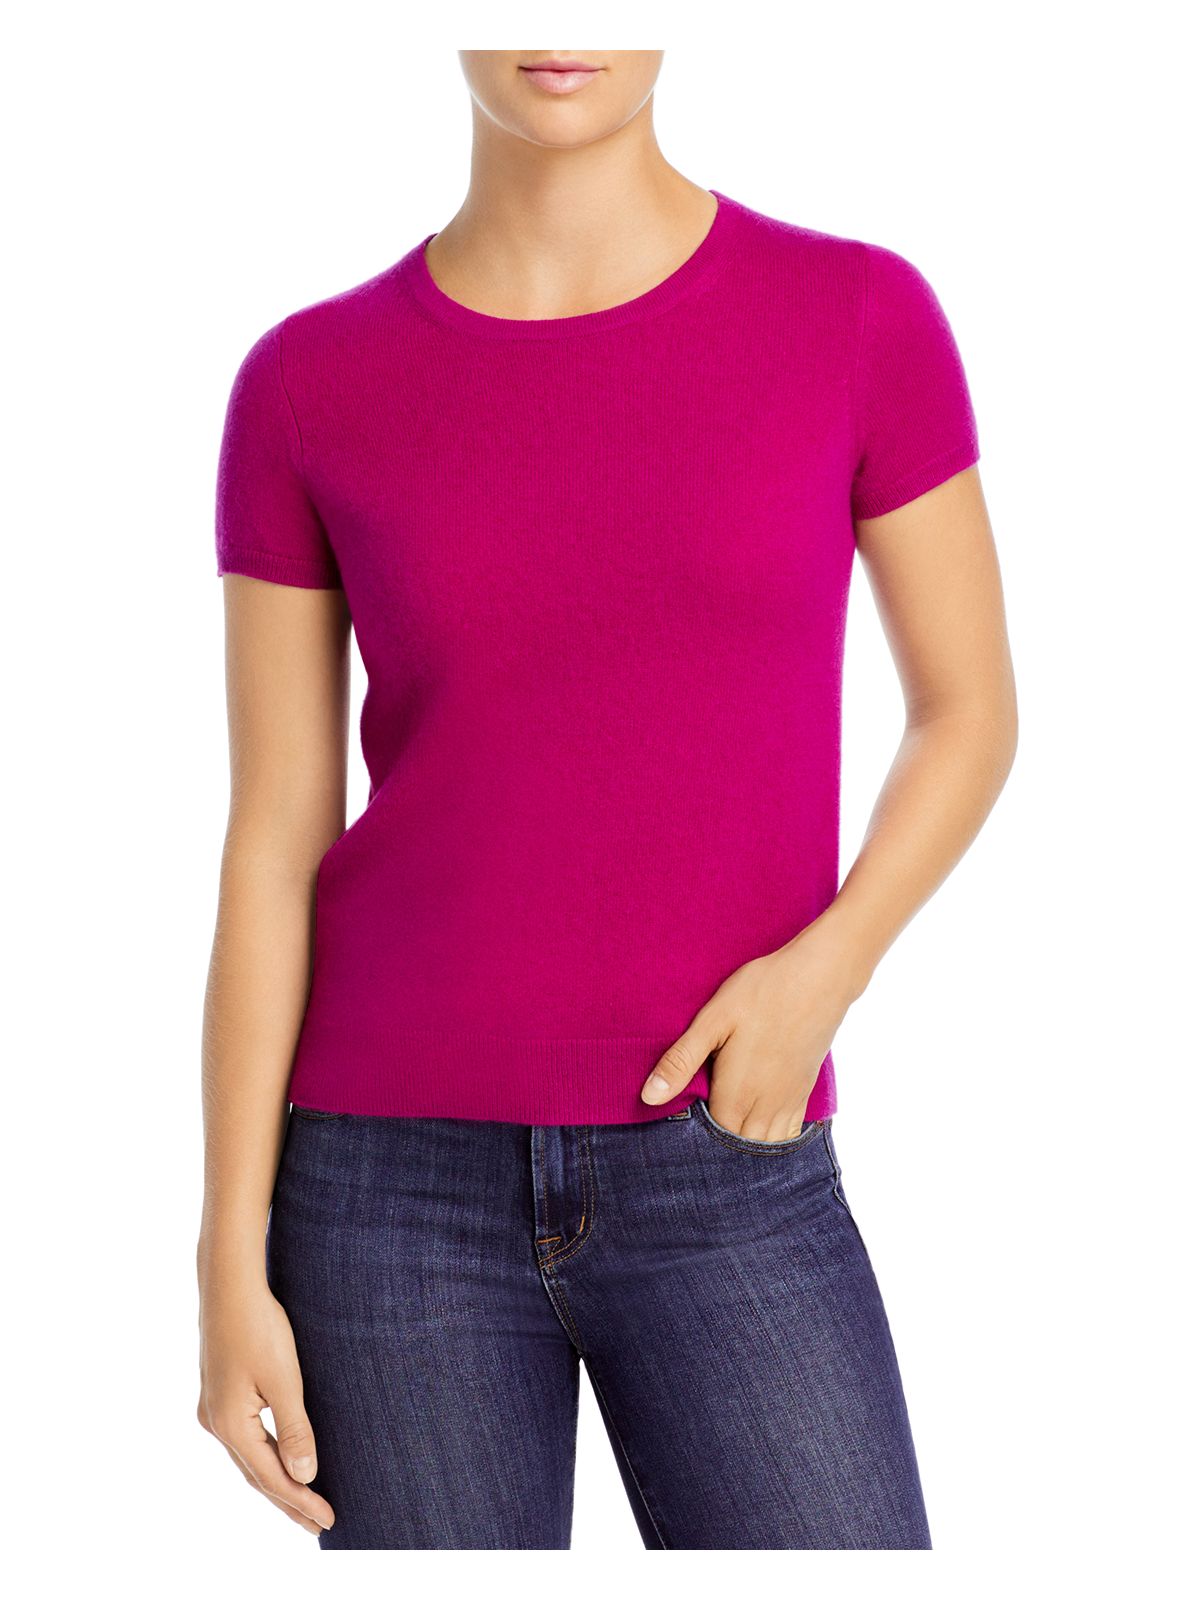 Designer Brand Womens Purple Ribbed Short Sleeve Crew Neck Sweater S